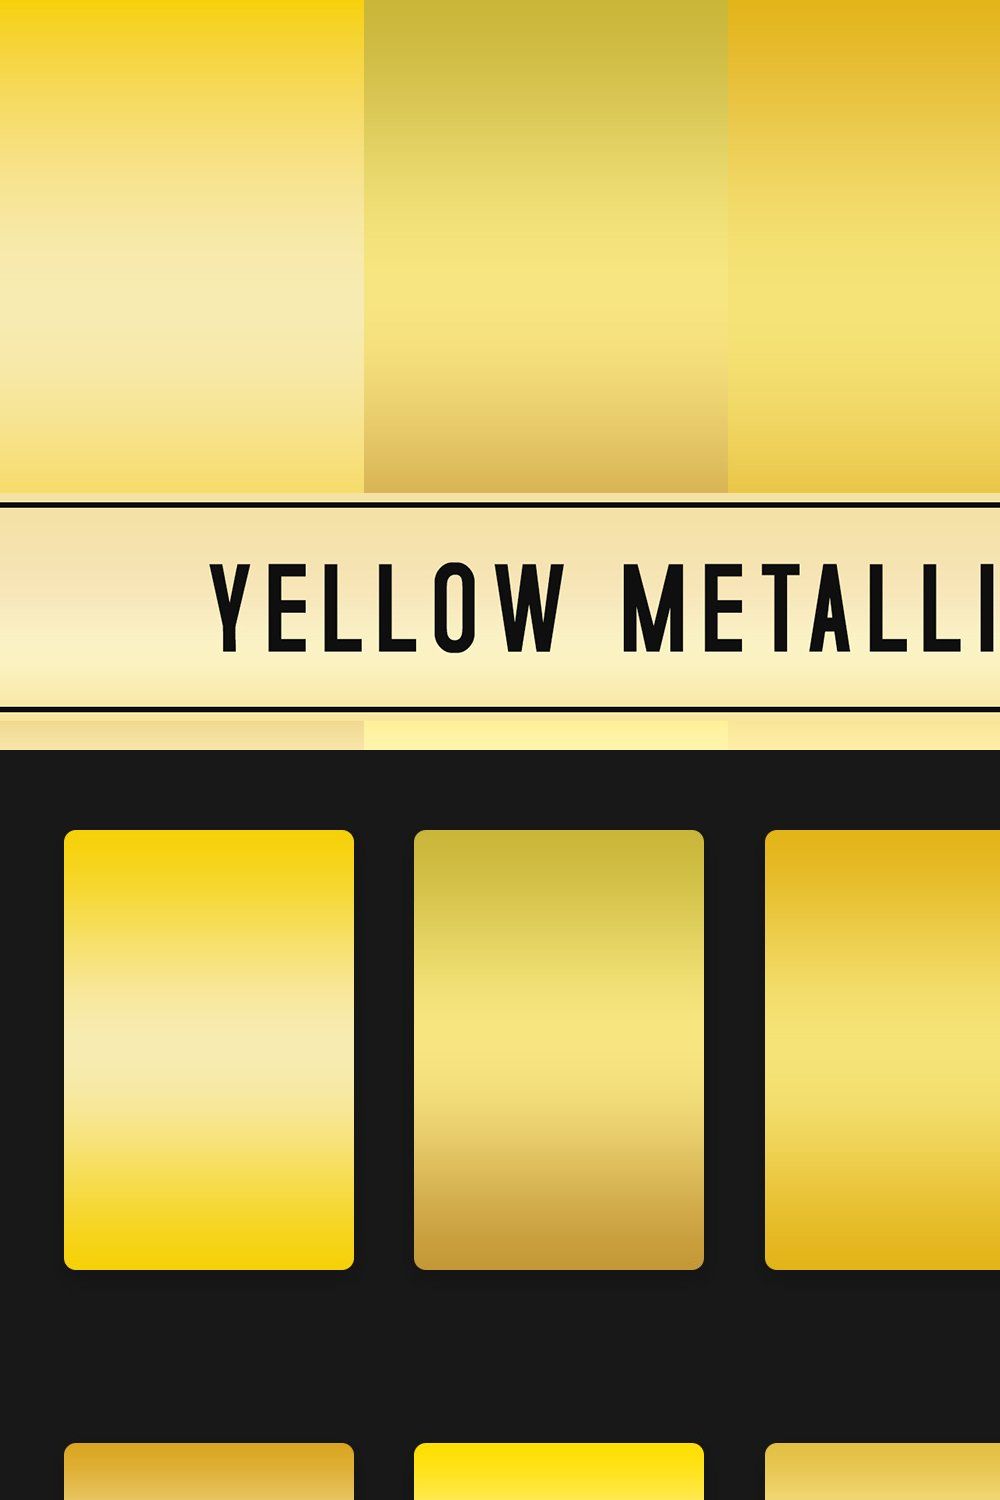 Yellow Metallic Gradients pinterest preview image.